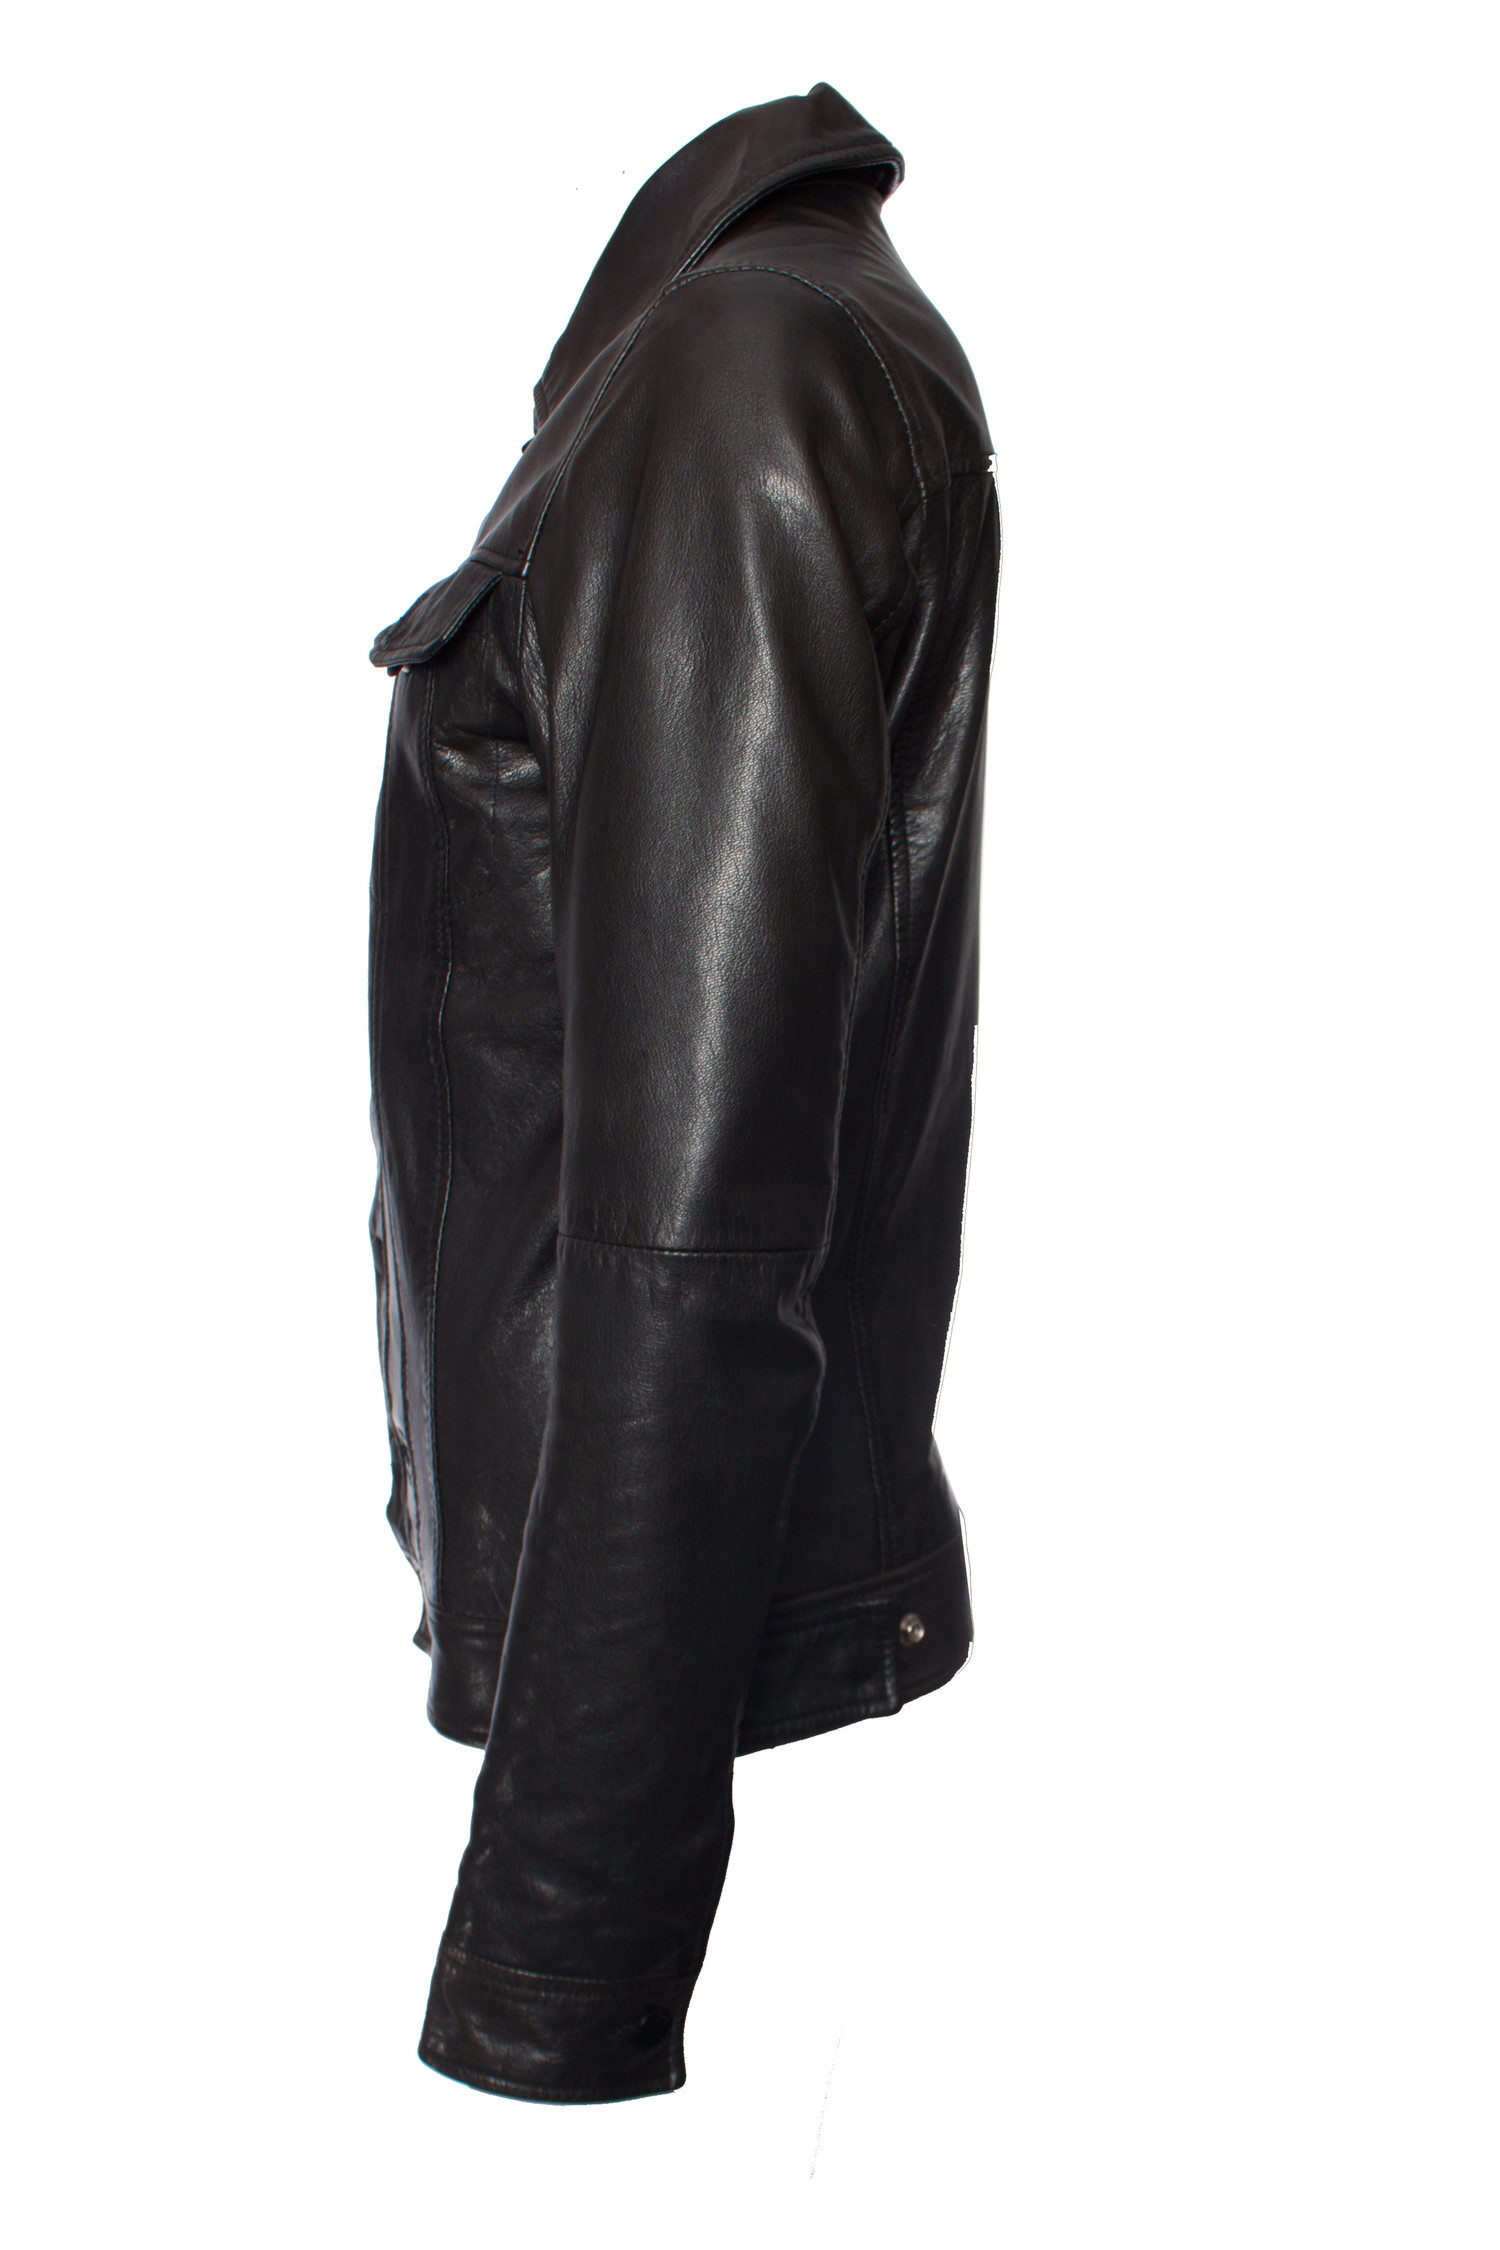 Productie Drank duim G-star Raw, zwart lederen jas in maat S. - Unique Designer Pieces